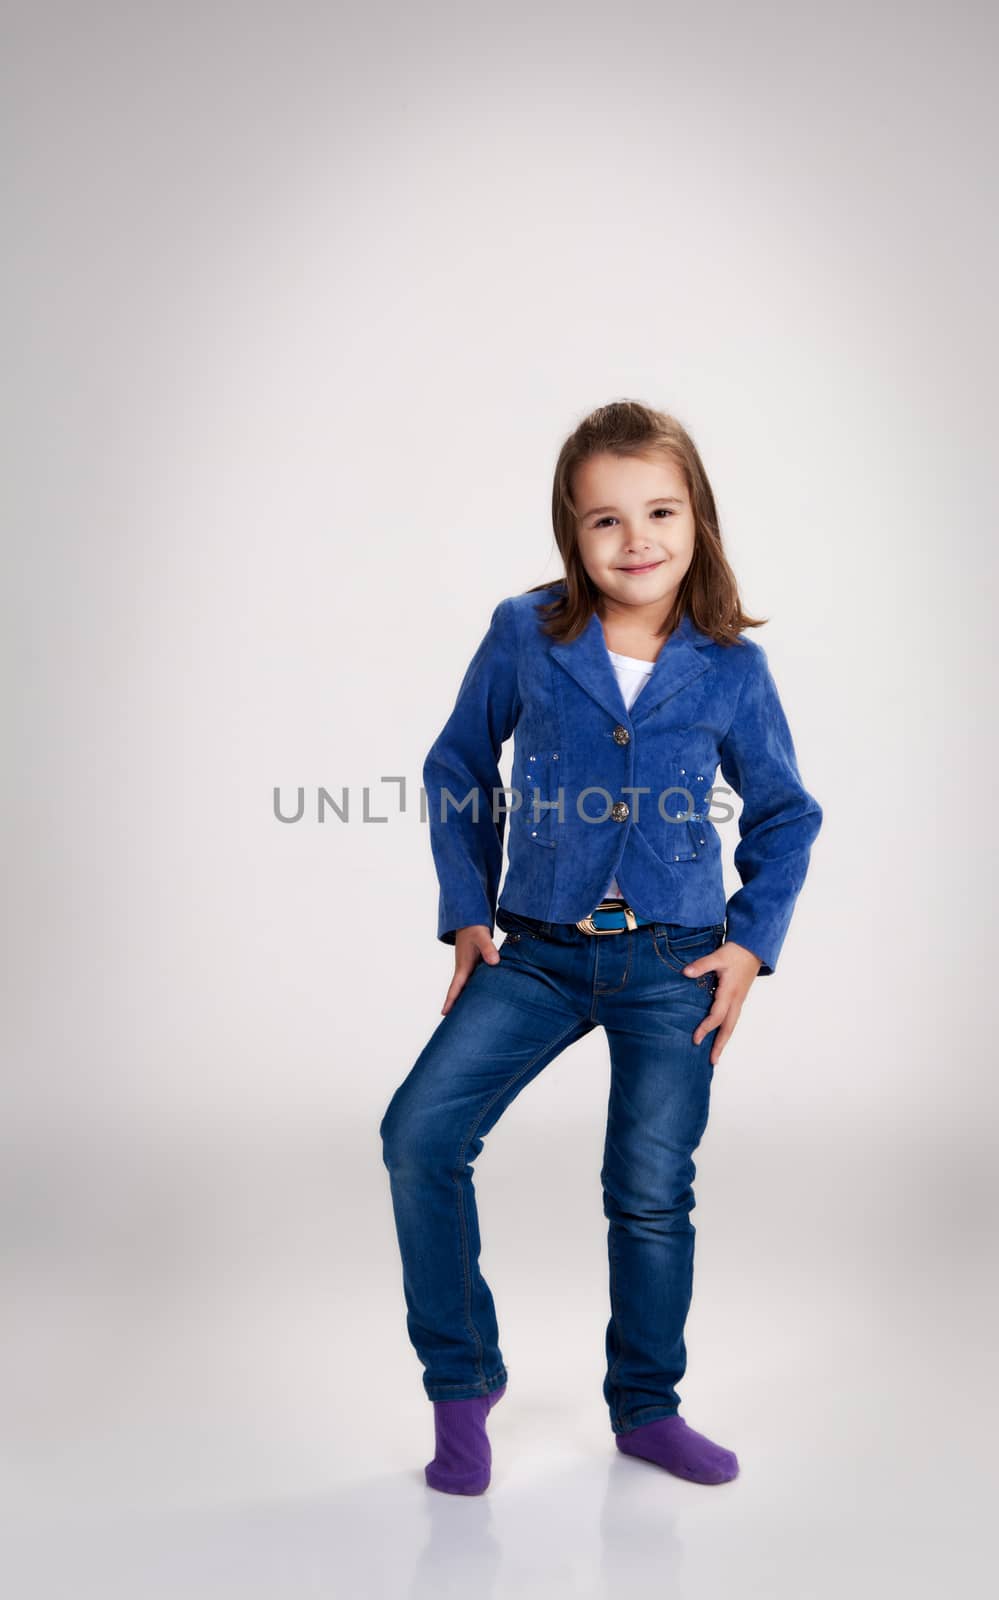 little girl in blue jeans and jacket posing in the studio by raddnatt